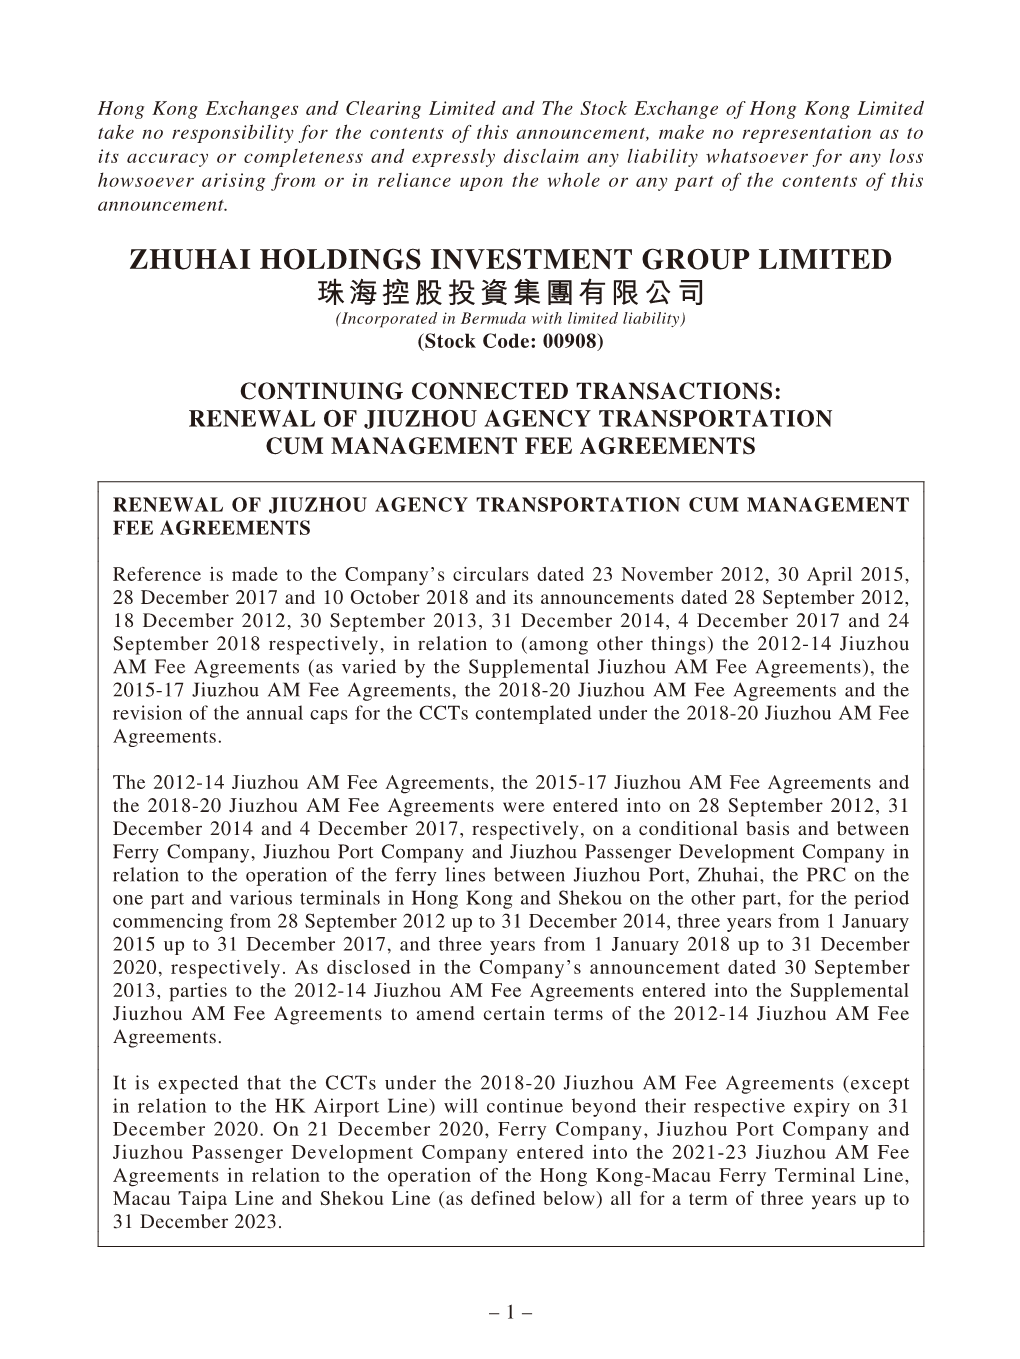 Renewal of Jiuzhou Agency Transportation Cum Management Fee Agreements